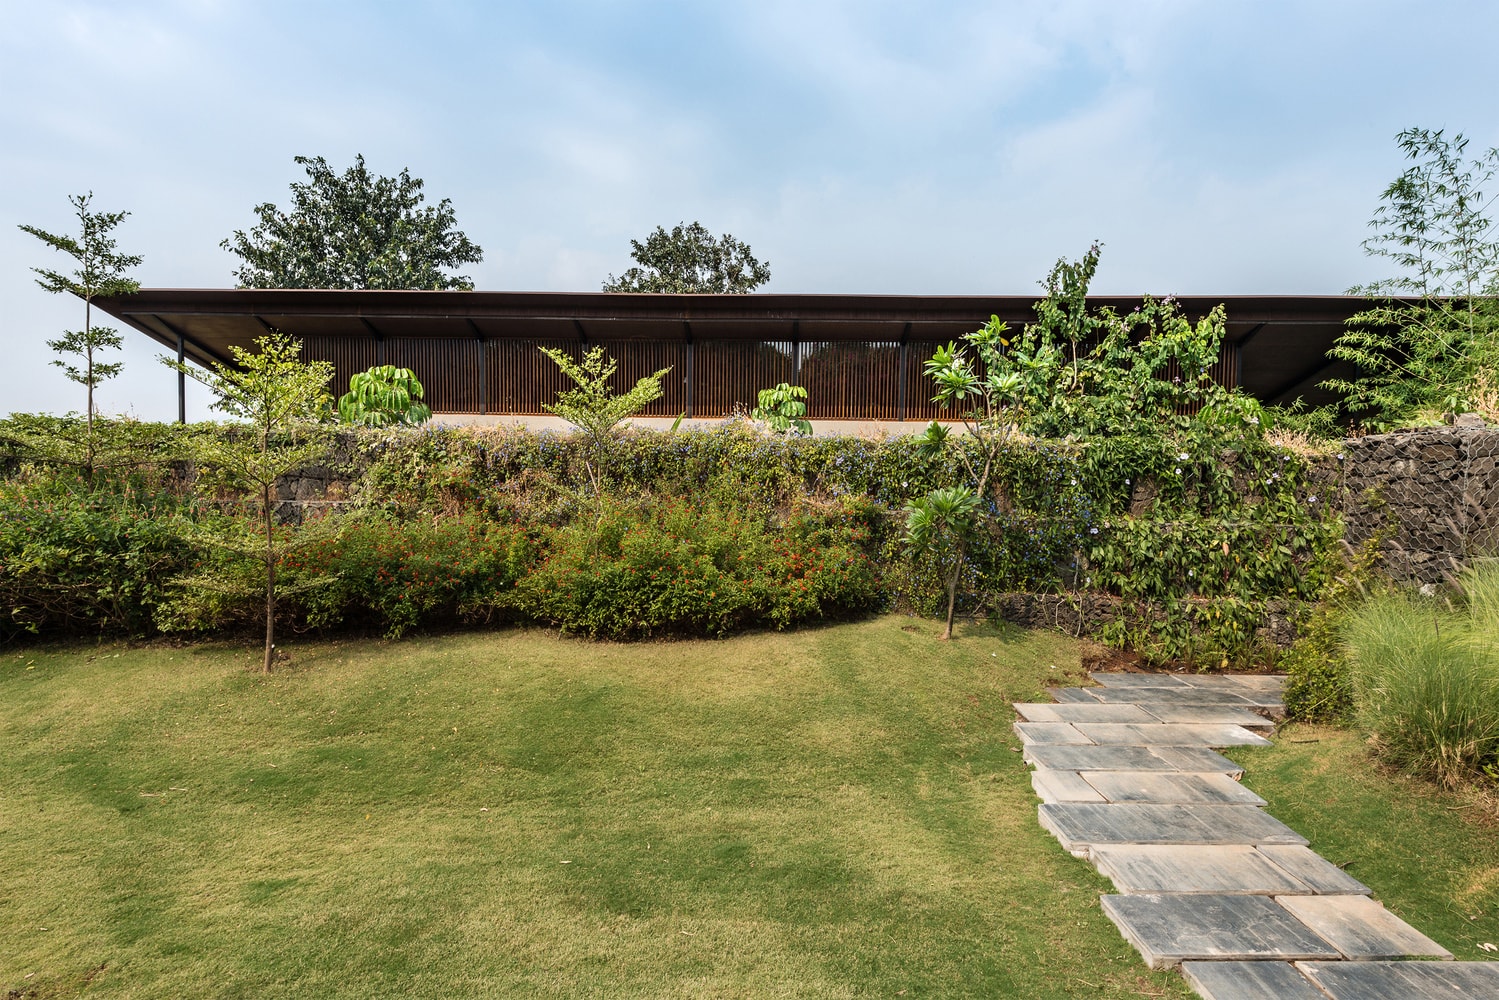 India Countryside Home Residence Spasm Design Studio Lanavala